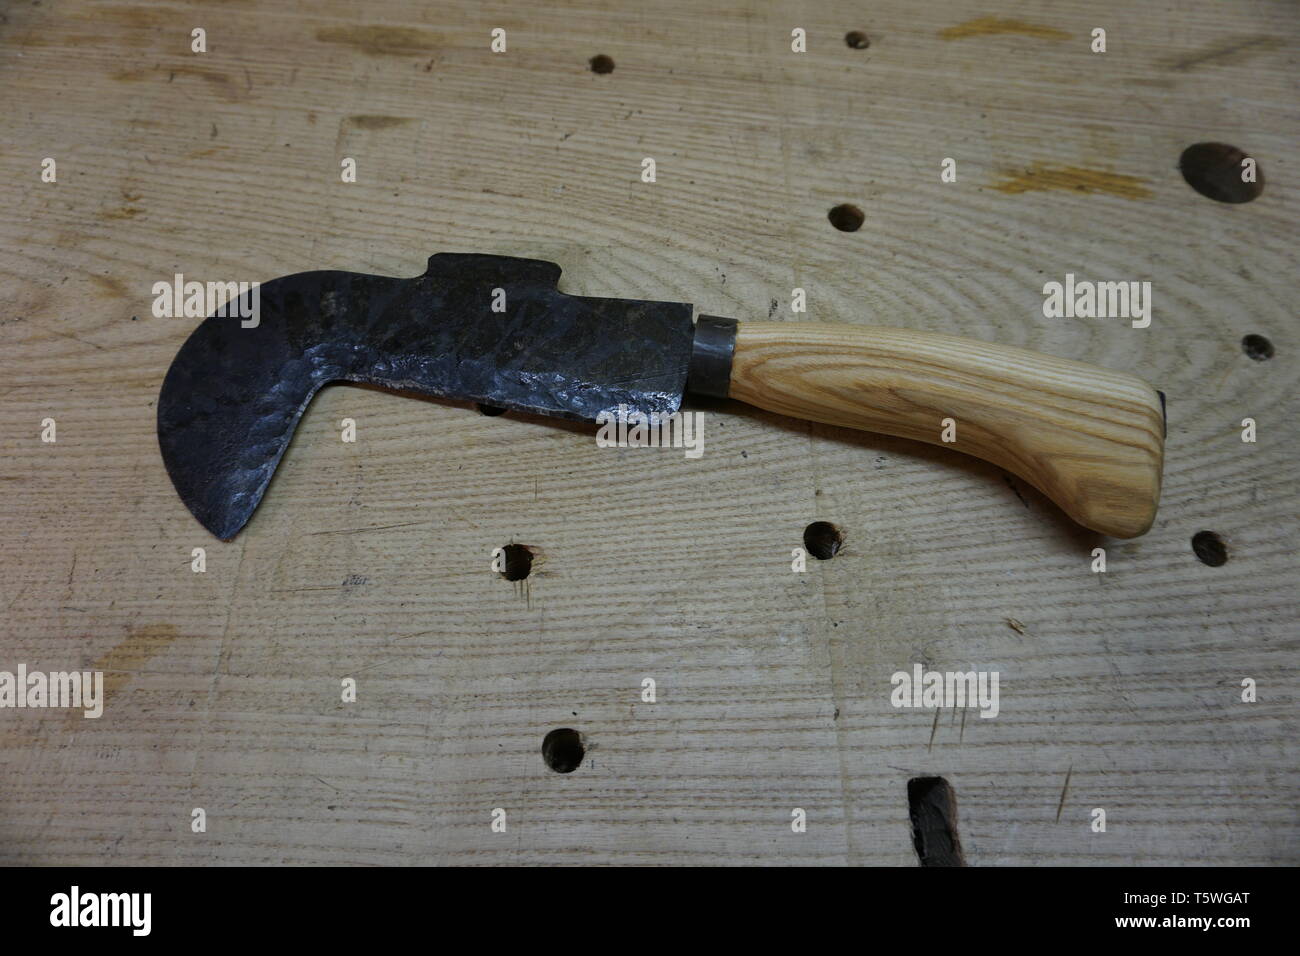 daegrad tools billhook brightside pattern no1 made in sheffield Stock Photo